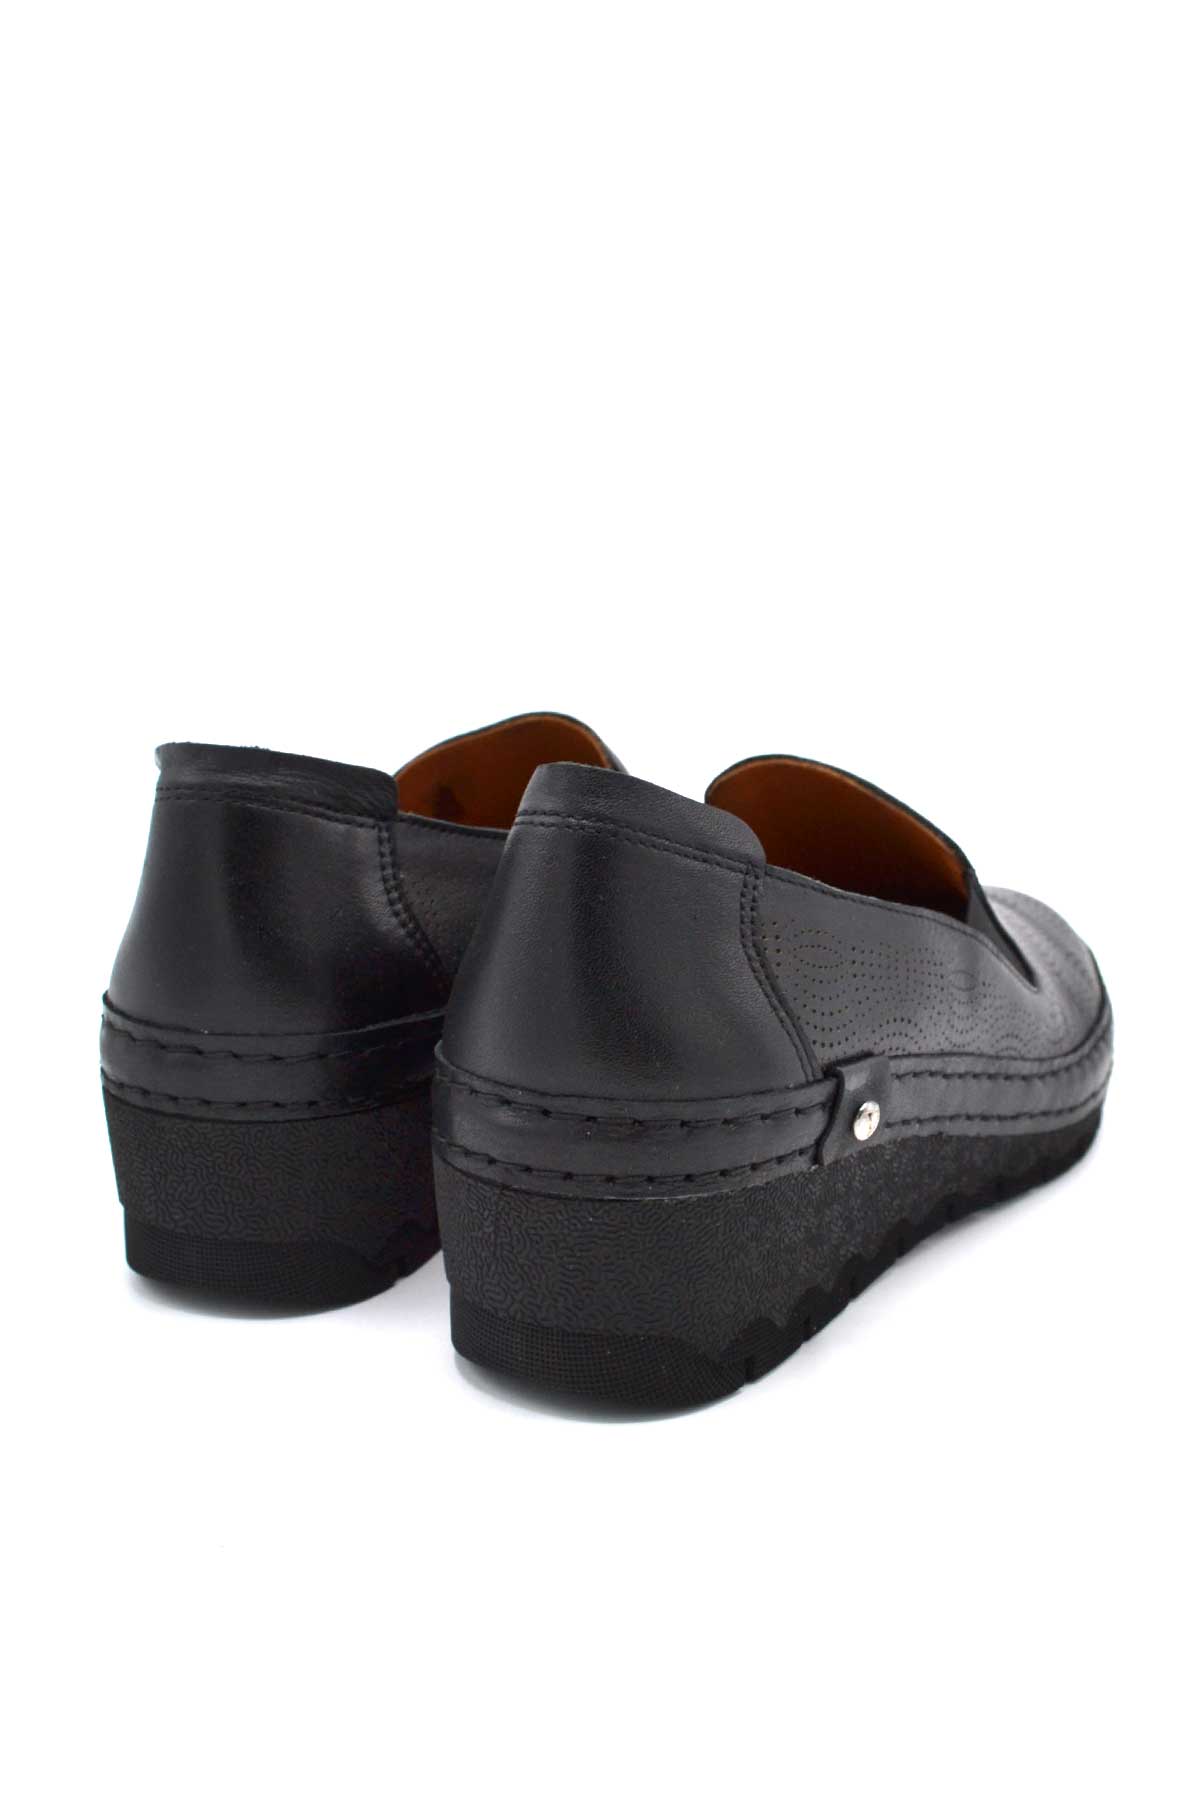 Kadın Casual Deri Sneakers Siyah 2213501Y - Thumbnail